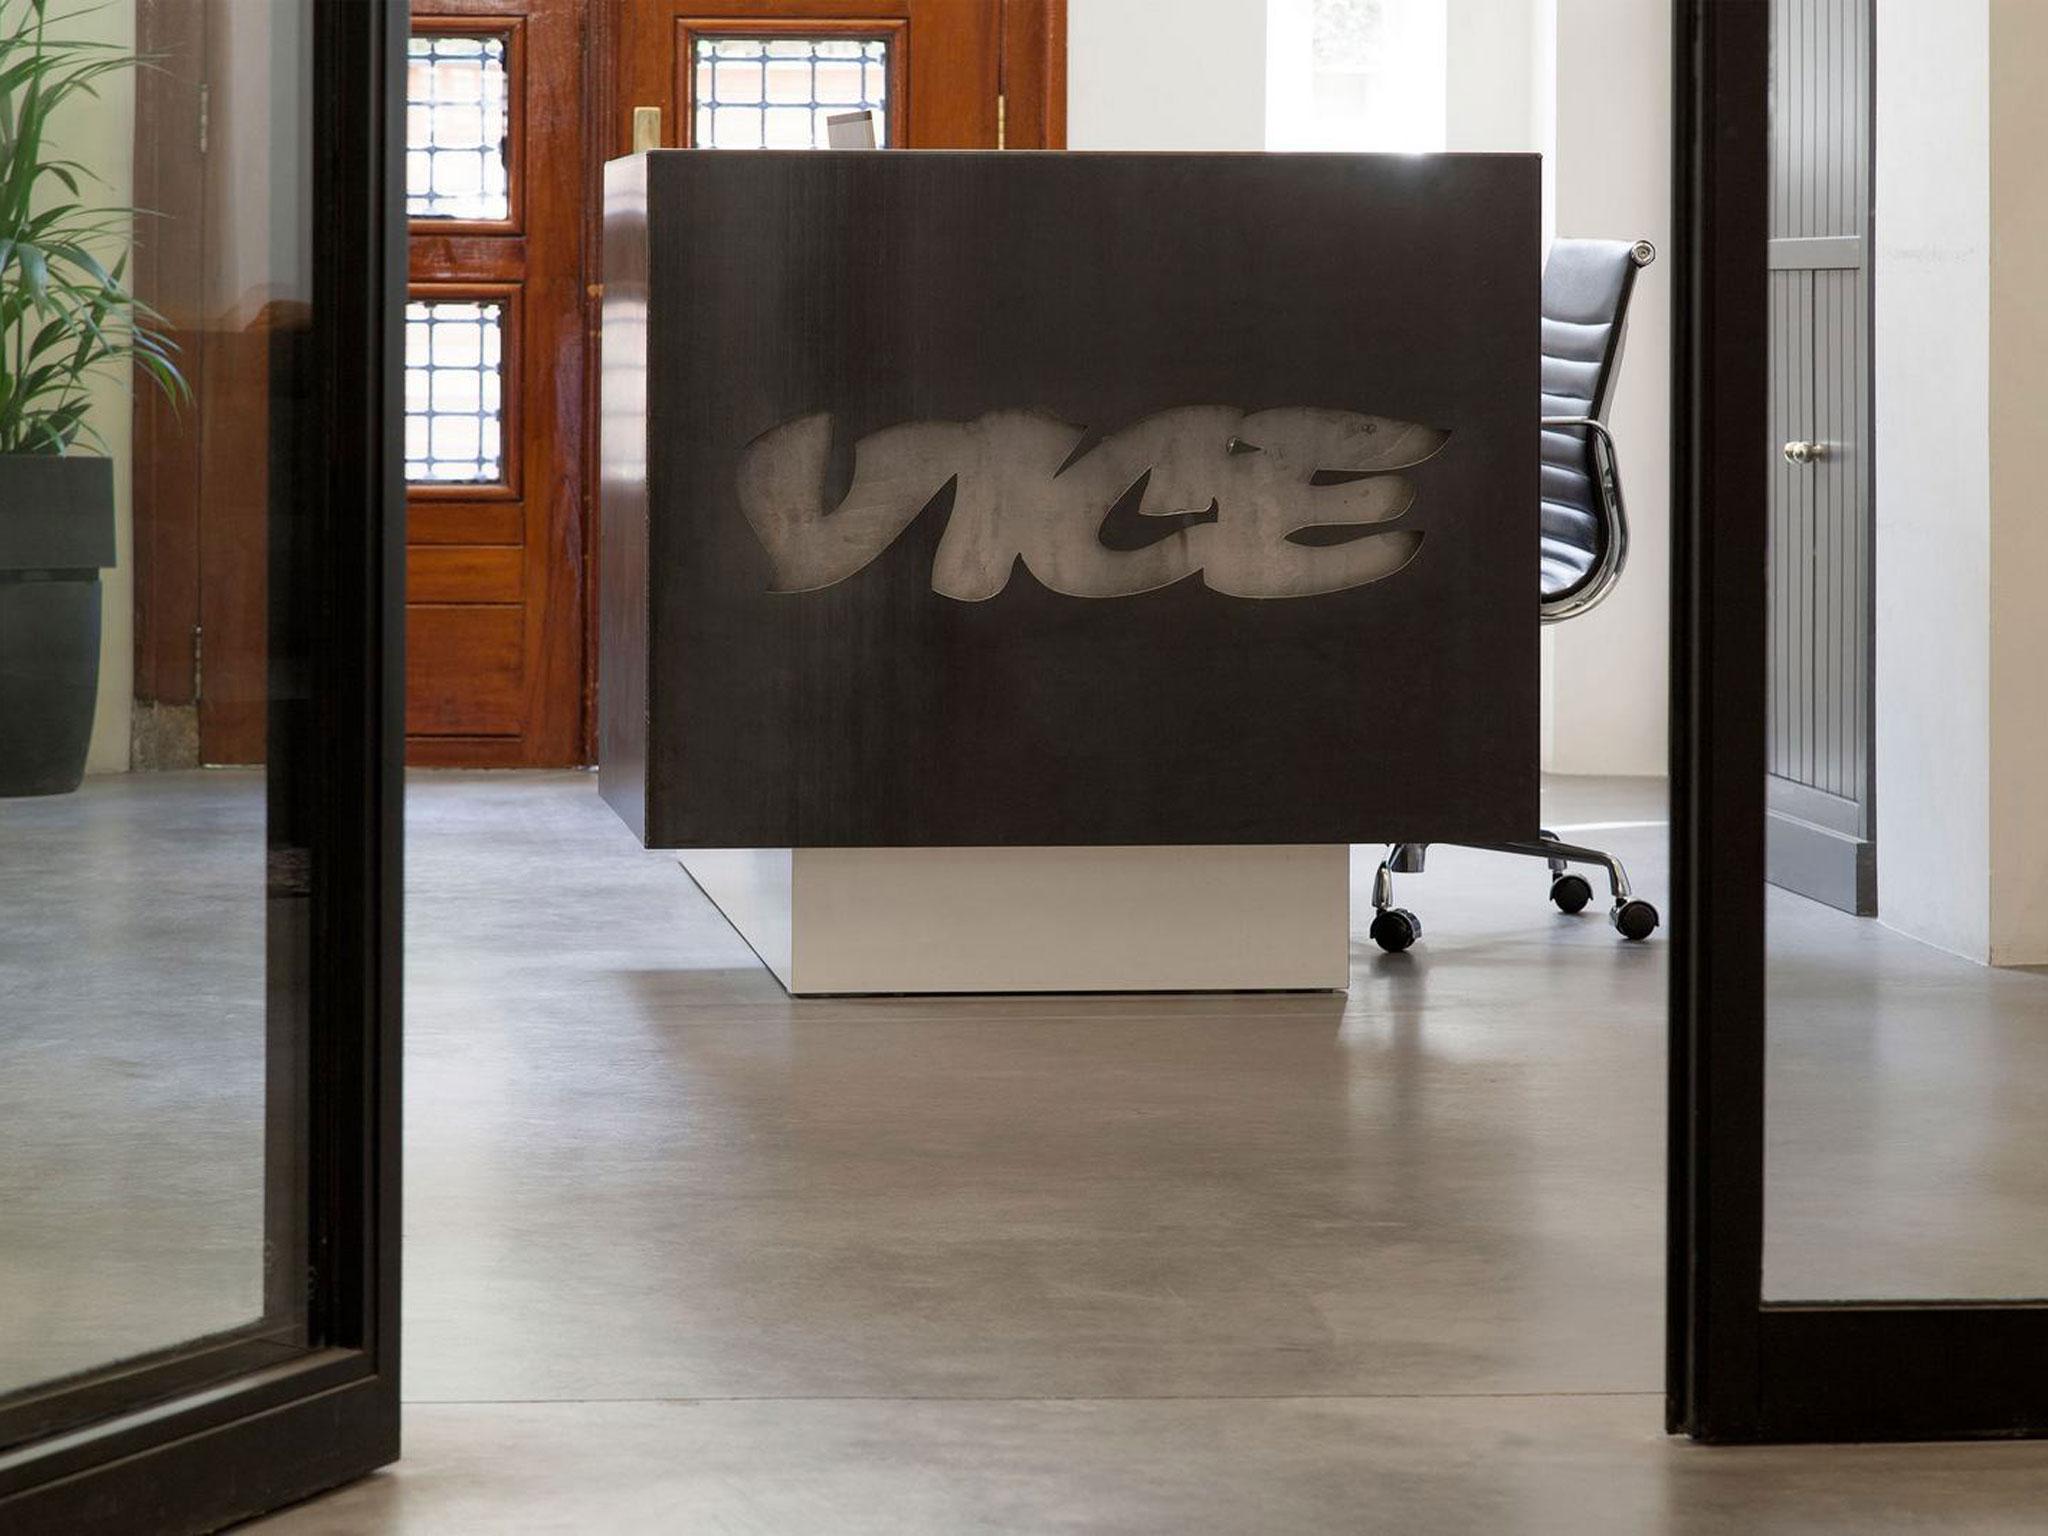 Vice's graffiti logo helps it to cement its anti-establishment roots